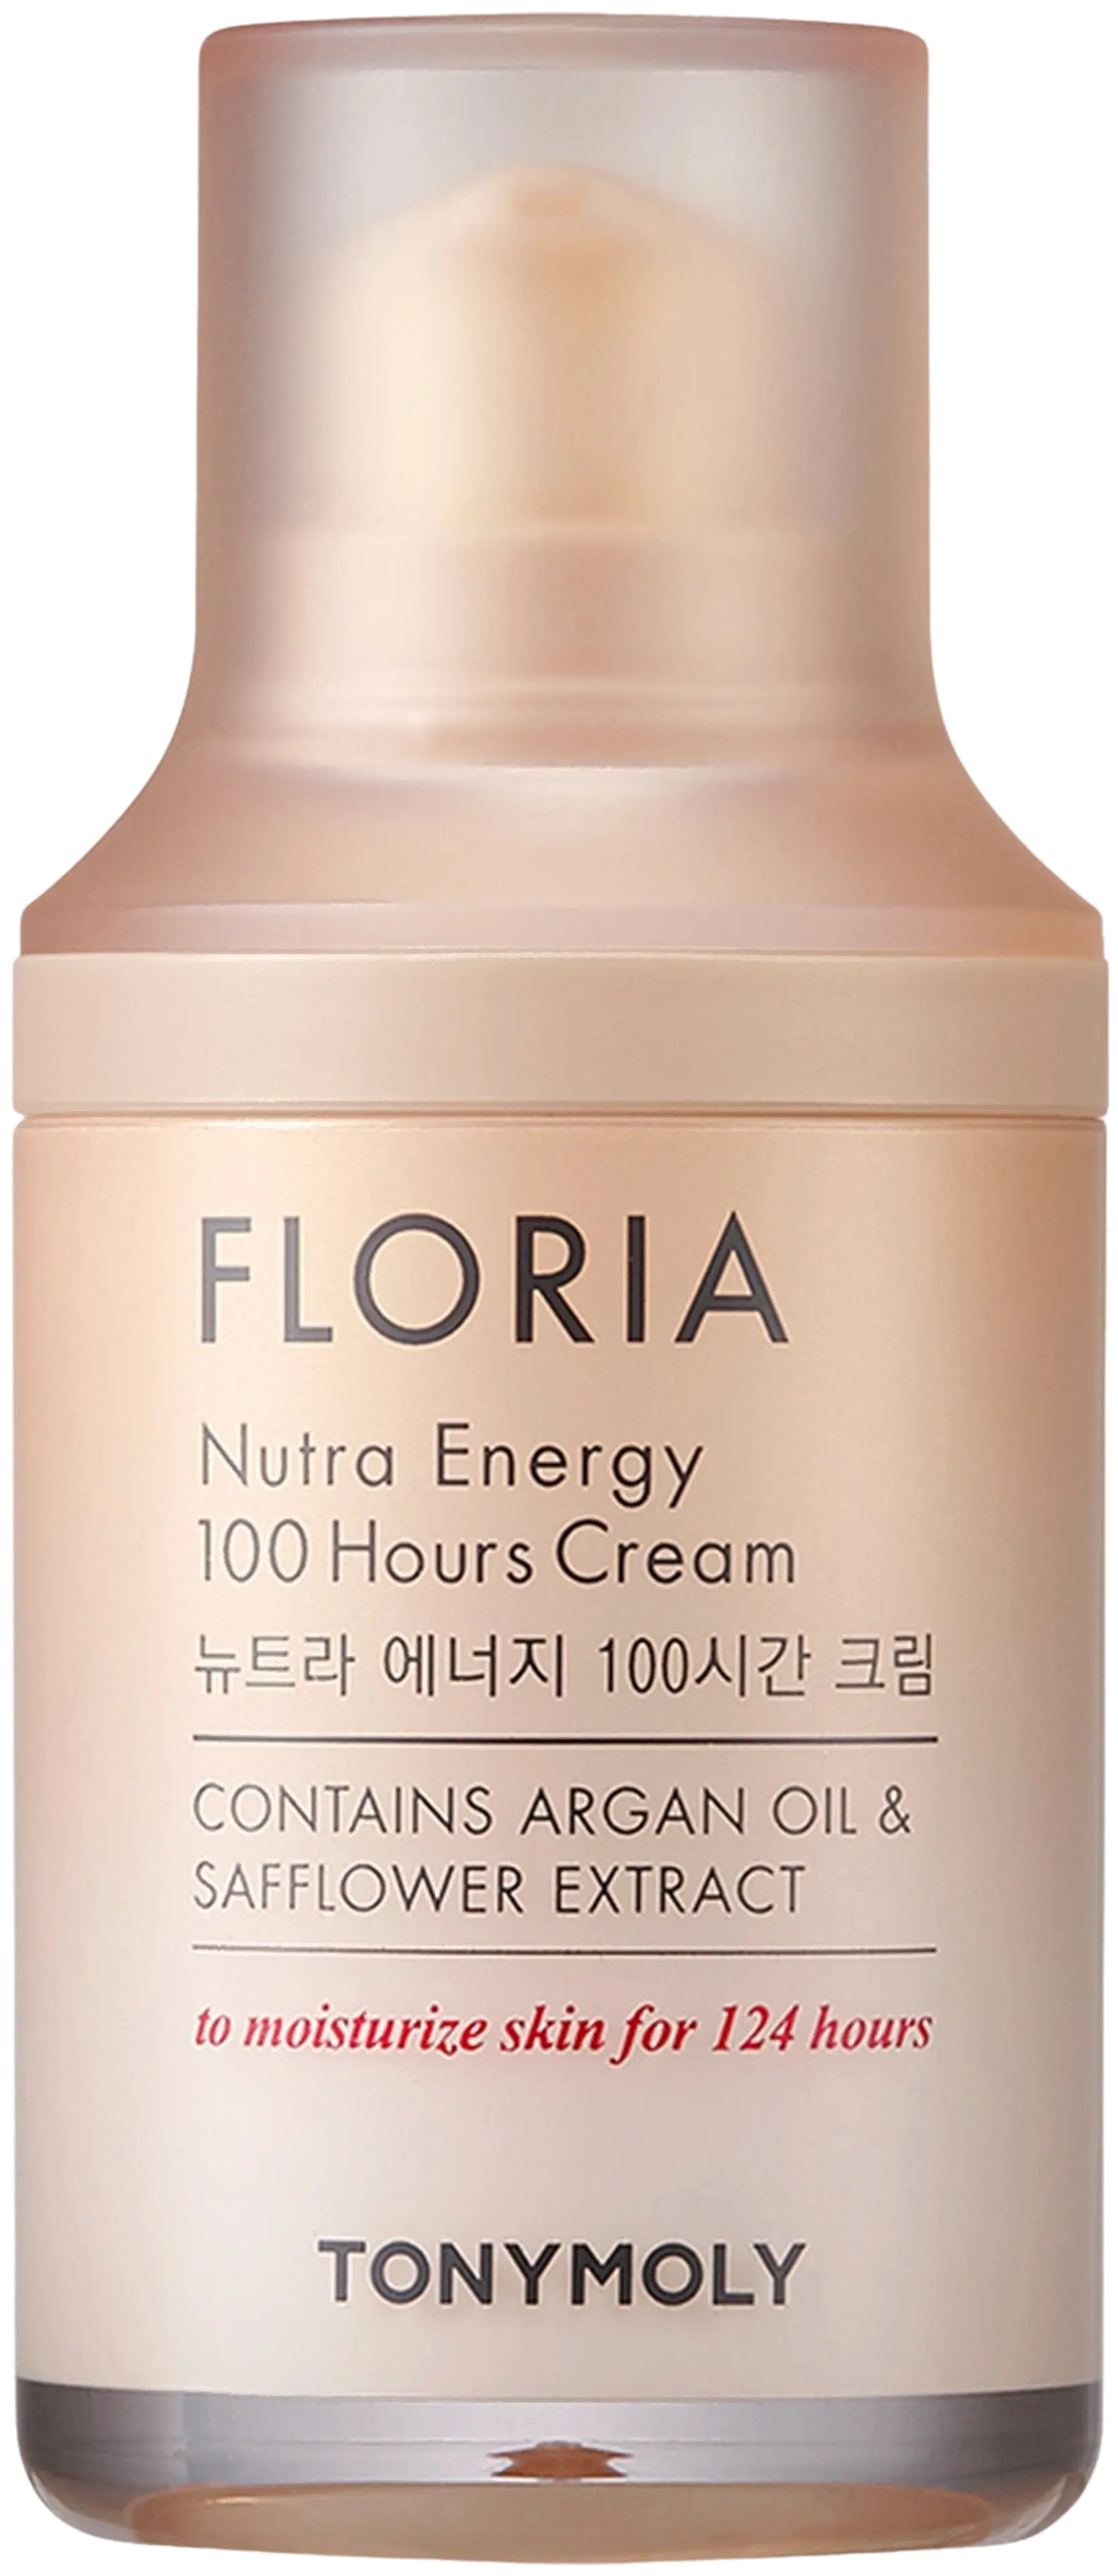 TONYMOLY Floria Nutra Energy 100 Hours Cream kasvovoide 50ml